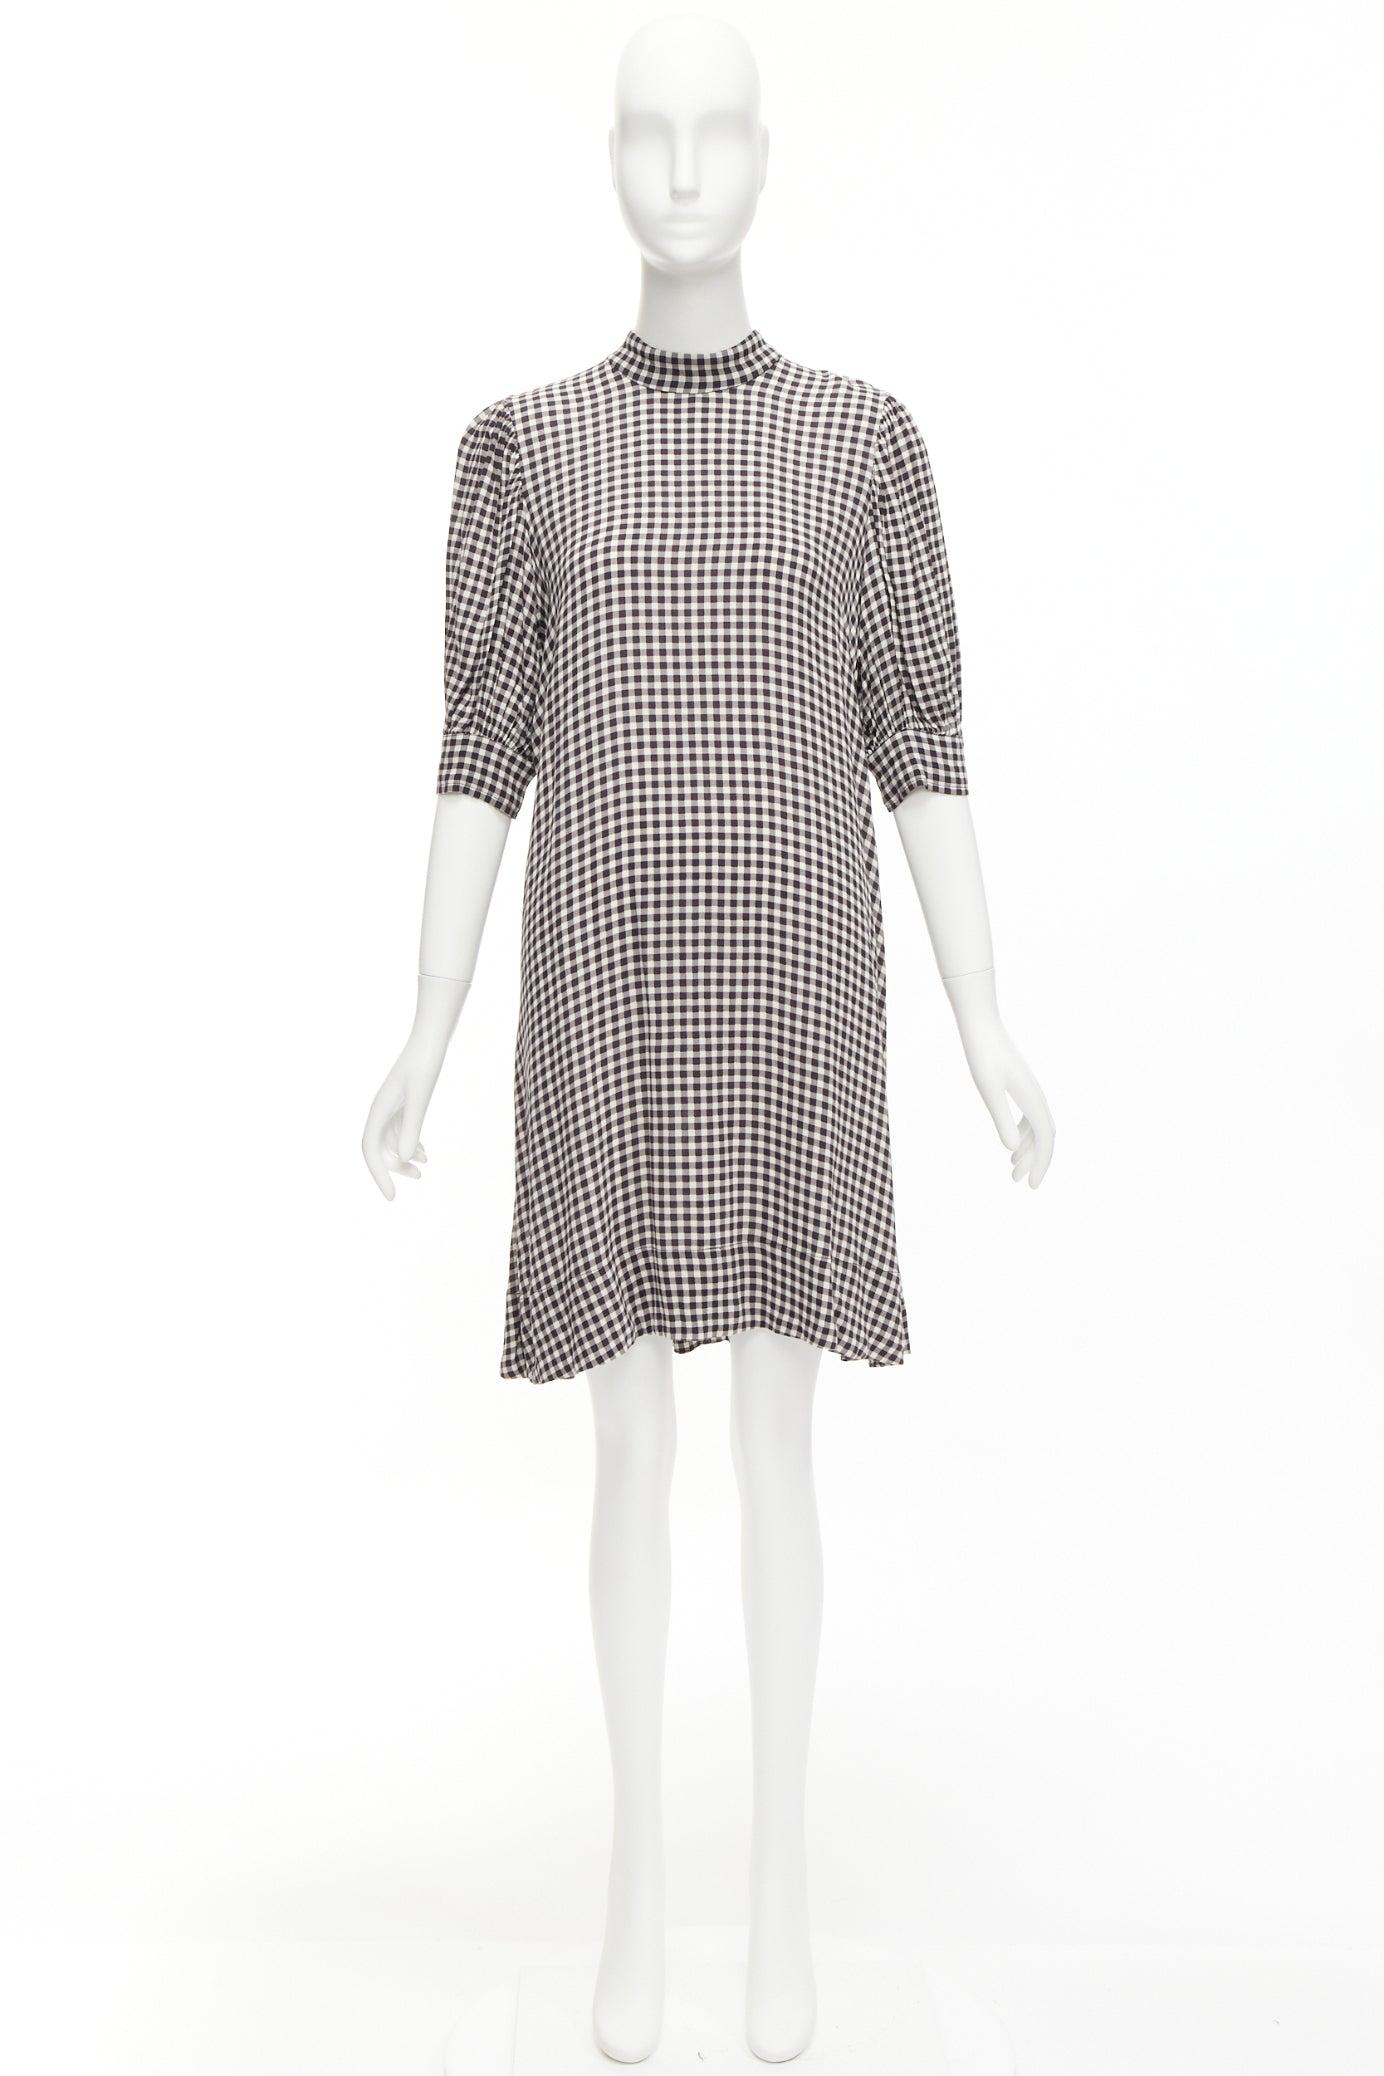 GANNI black white checkerboard print high neck half sleeve knee dress FR36 S For Sale 5